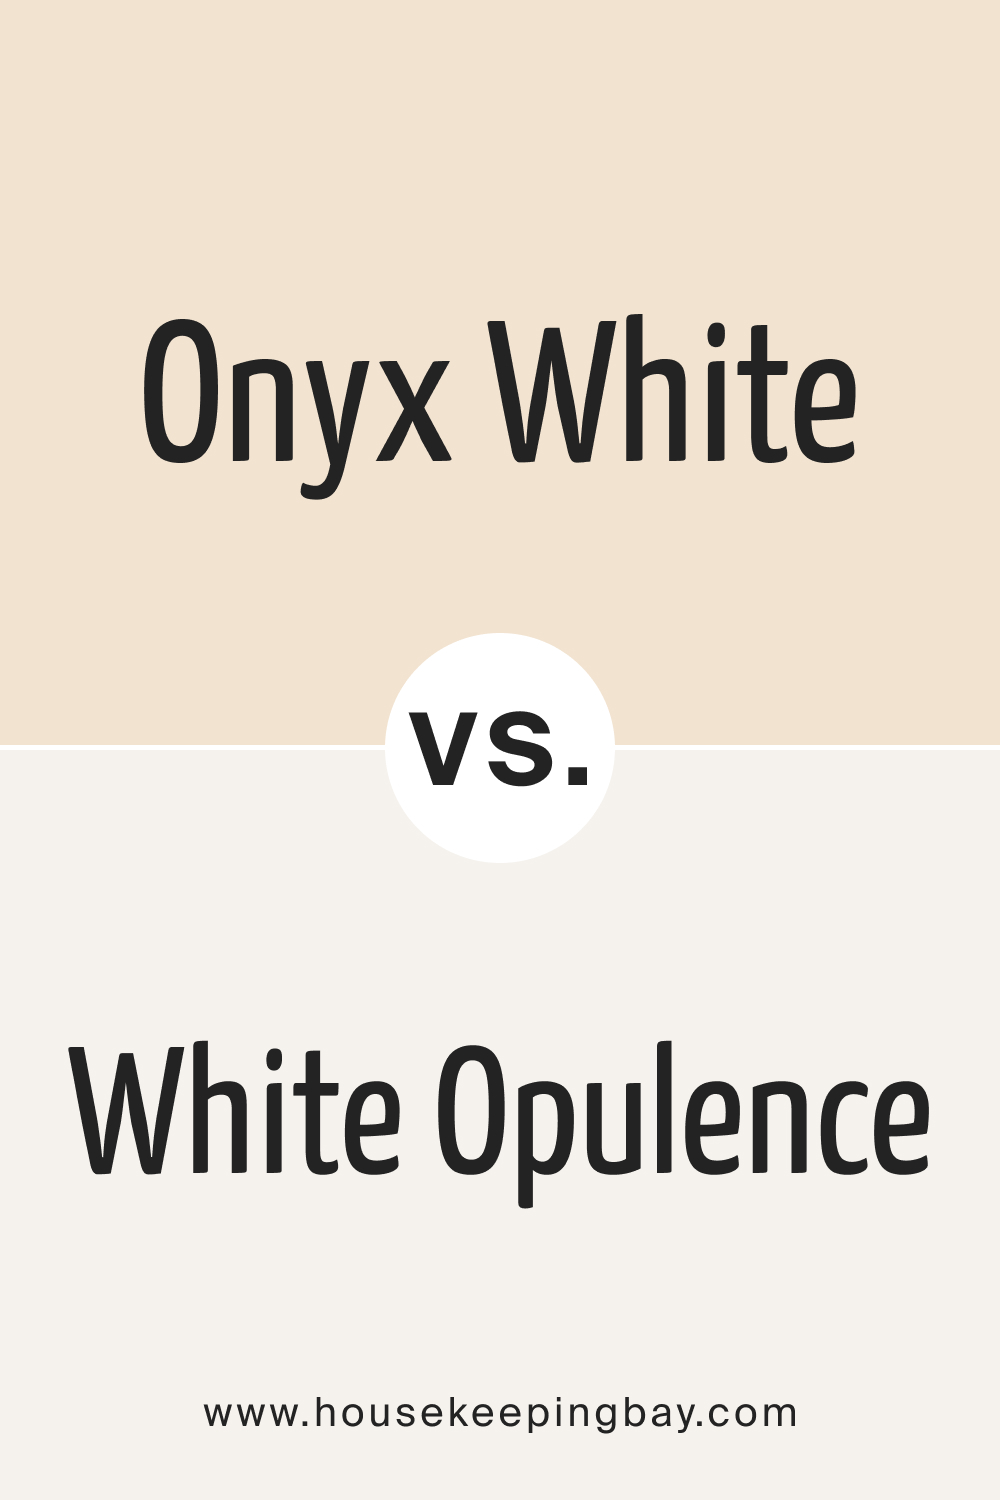 Onyx White OC 74 vs. BM OC 69 White Opulence